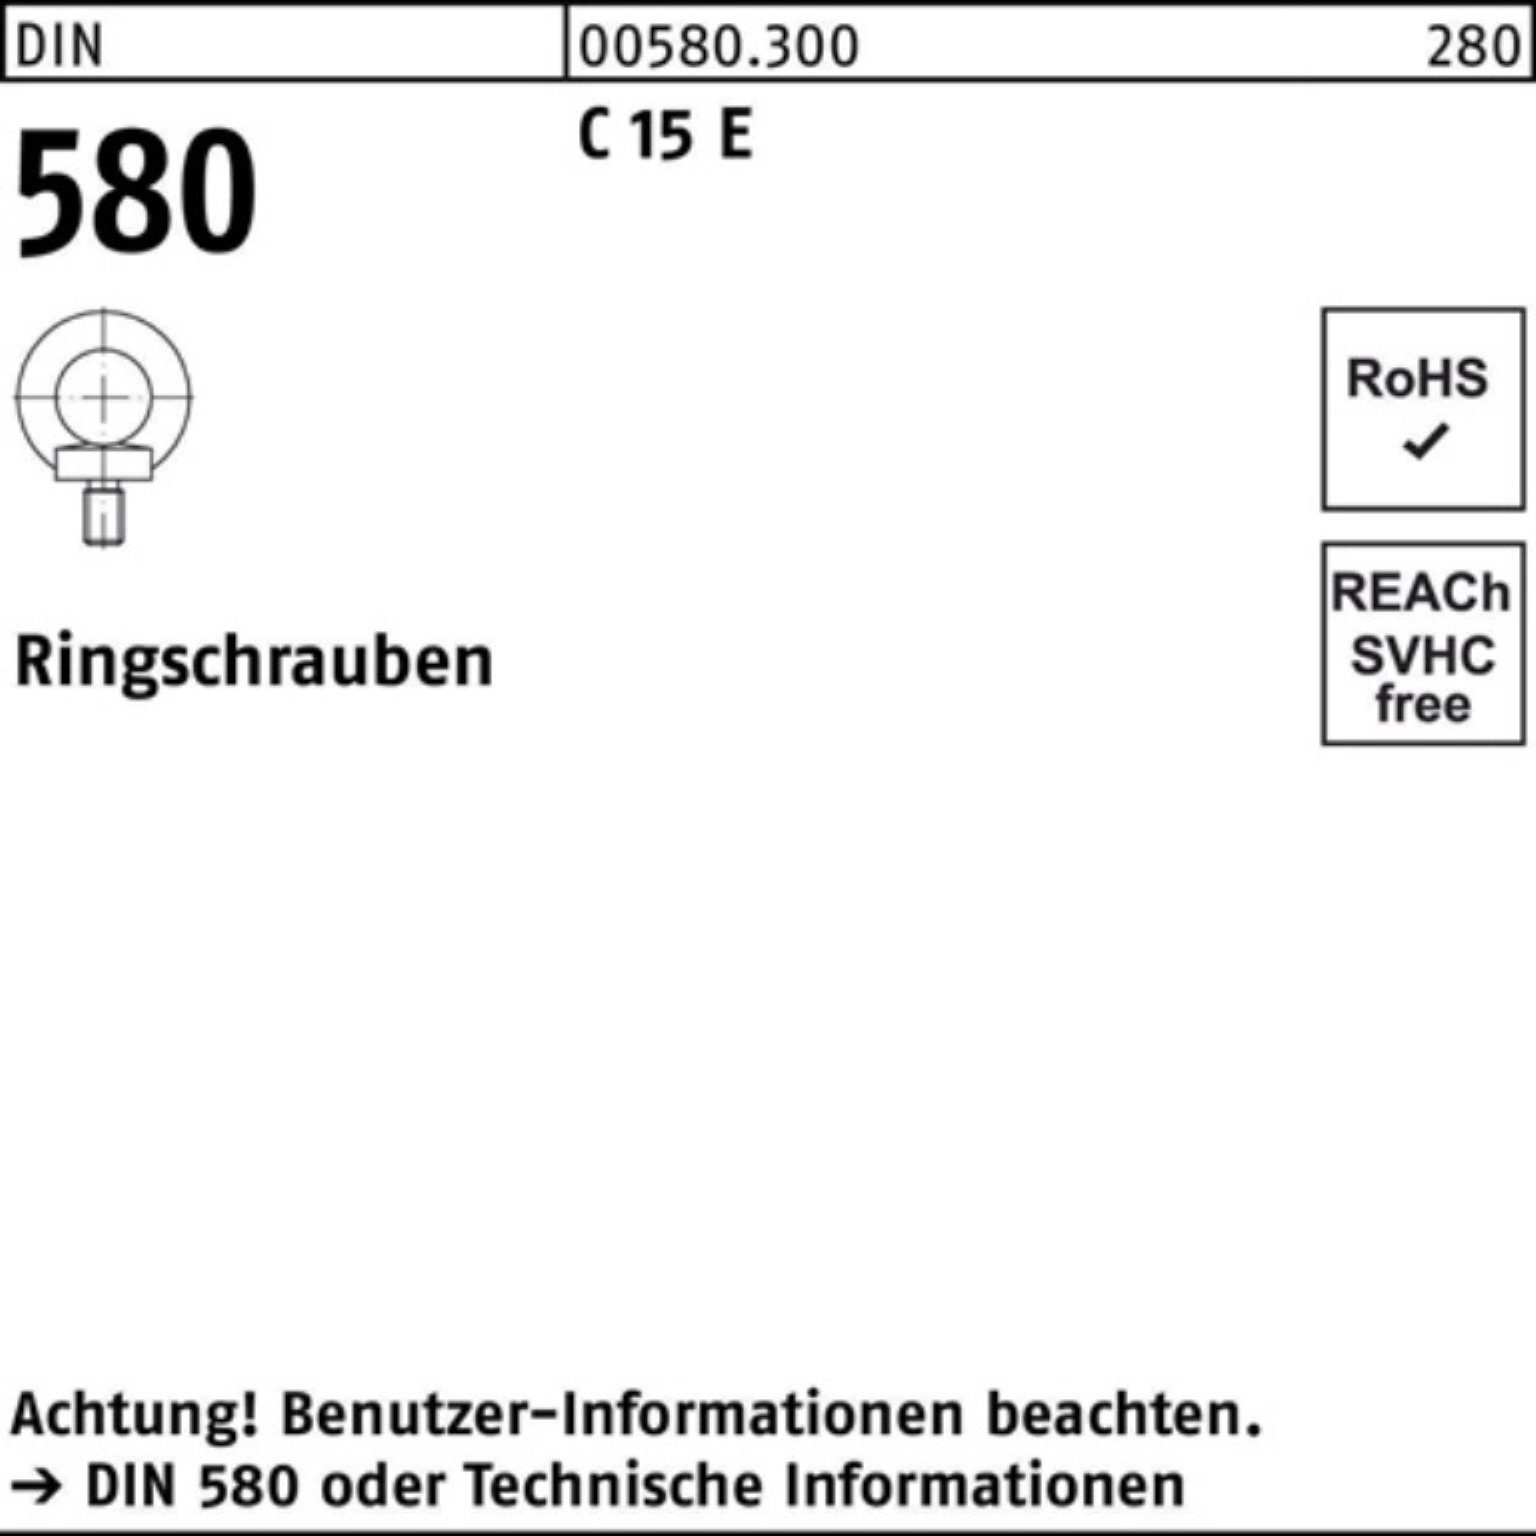 Reyher Schraube 100er Pack Ringschraube DIN 580 M45 C 15 E 1 Stück DIN 580 C 15 E Rin | Schrauben